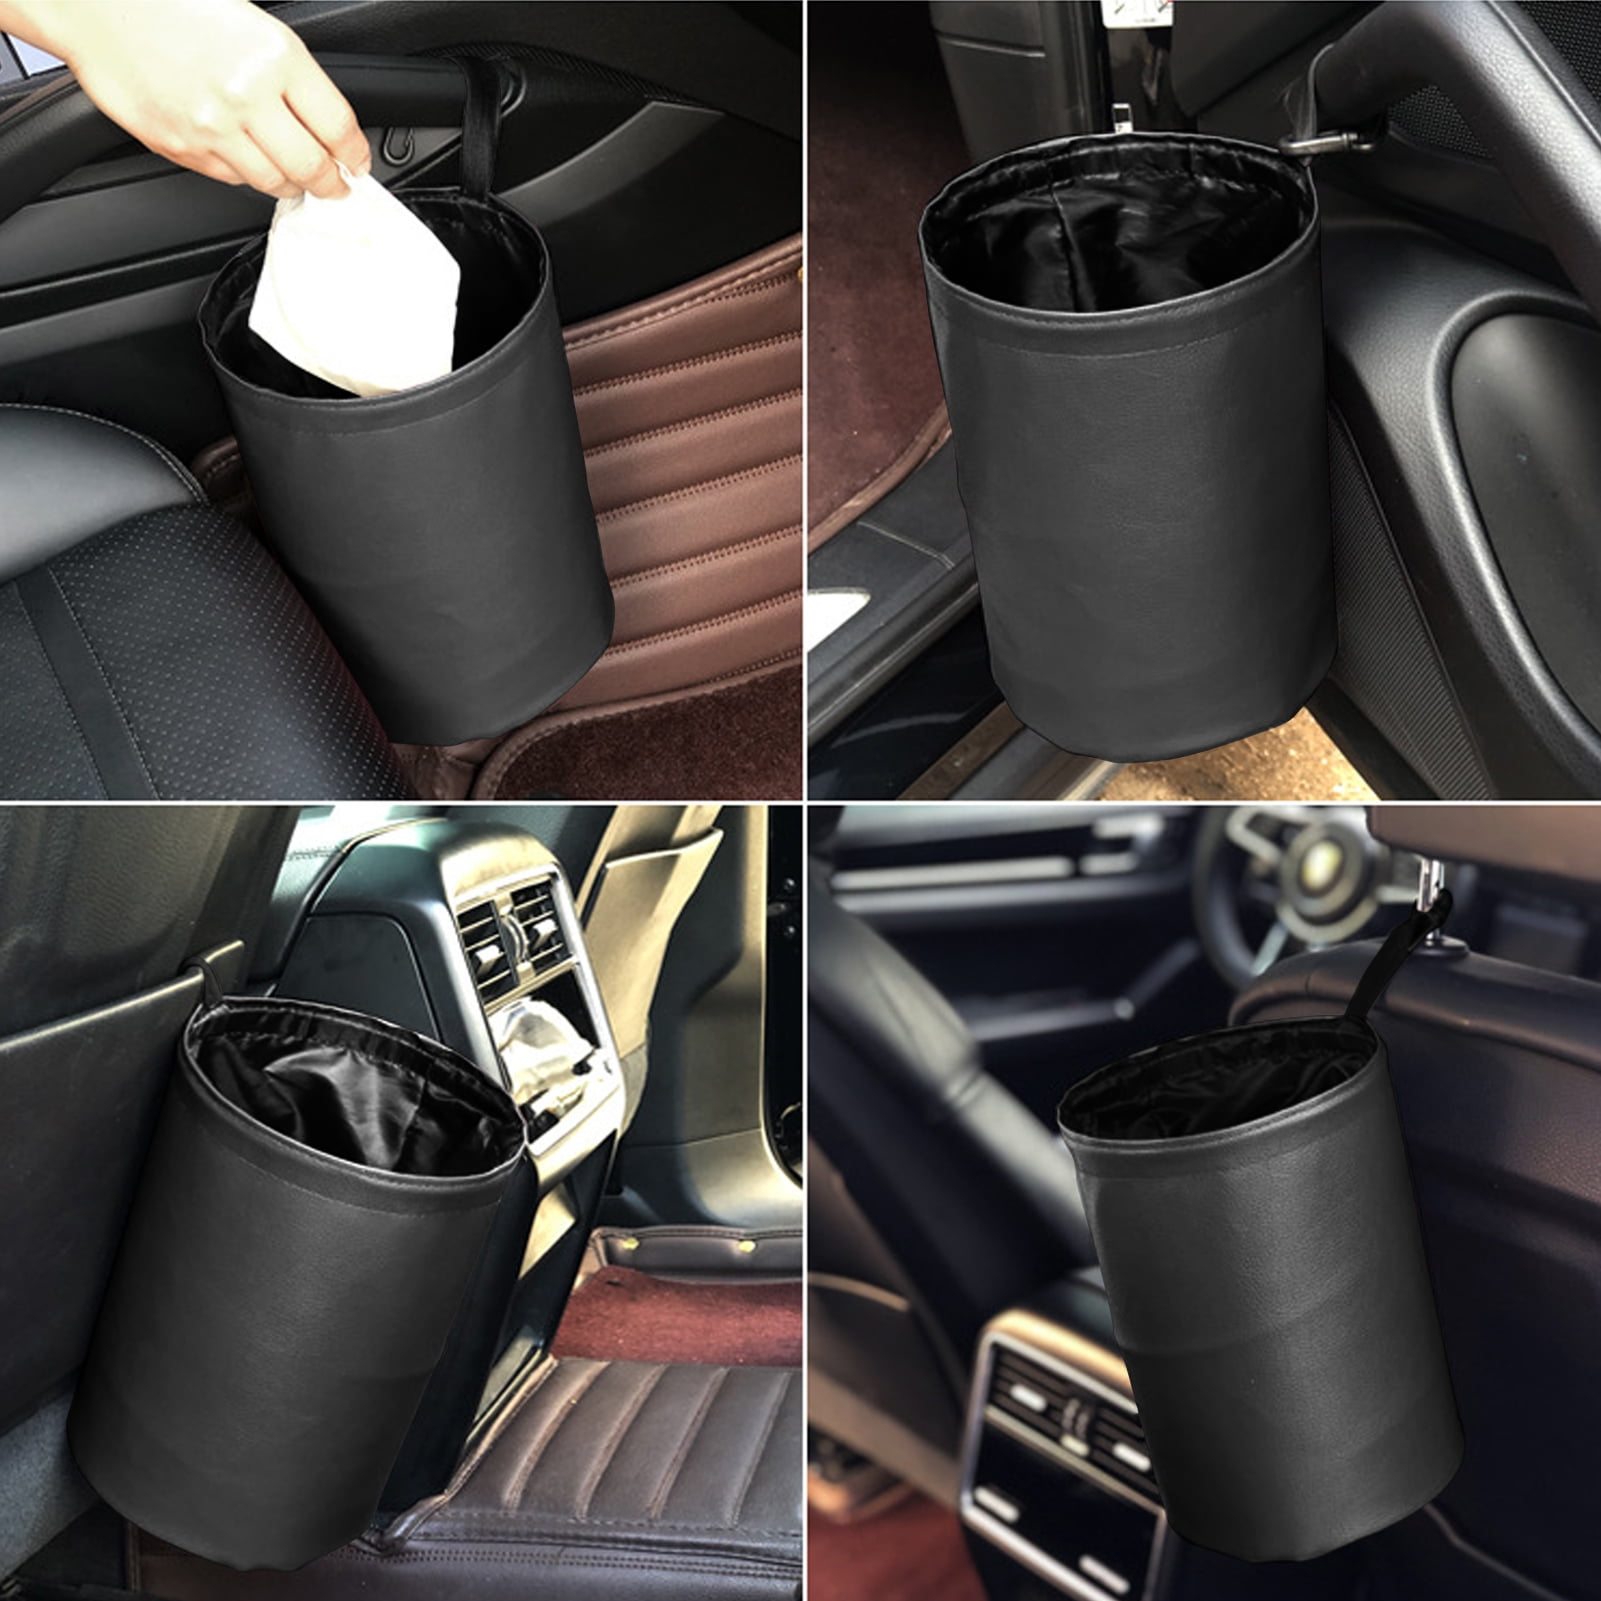 Homelove Car Trash Can, 100% Leak-Proof Waterproof Car Trash Bin